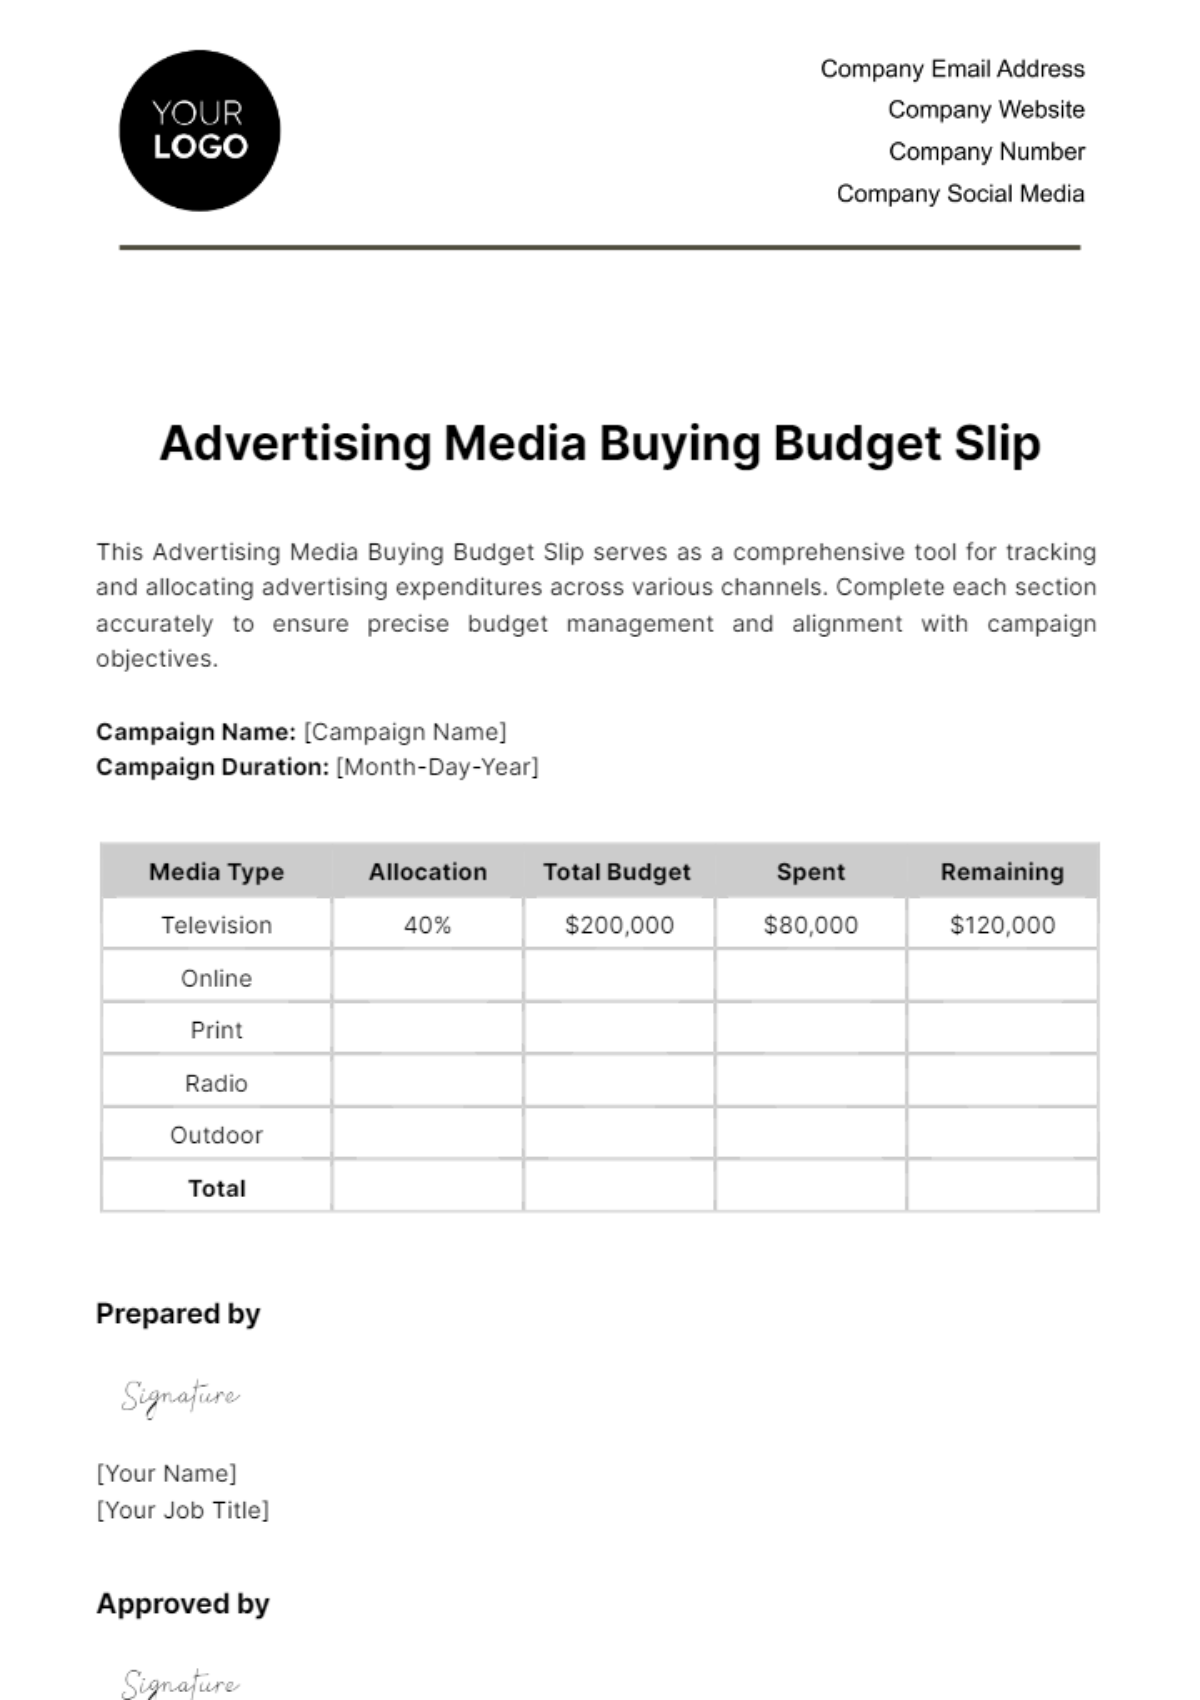 Free Advertising Media Buying Budget Slip Template